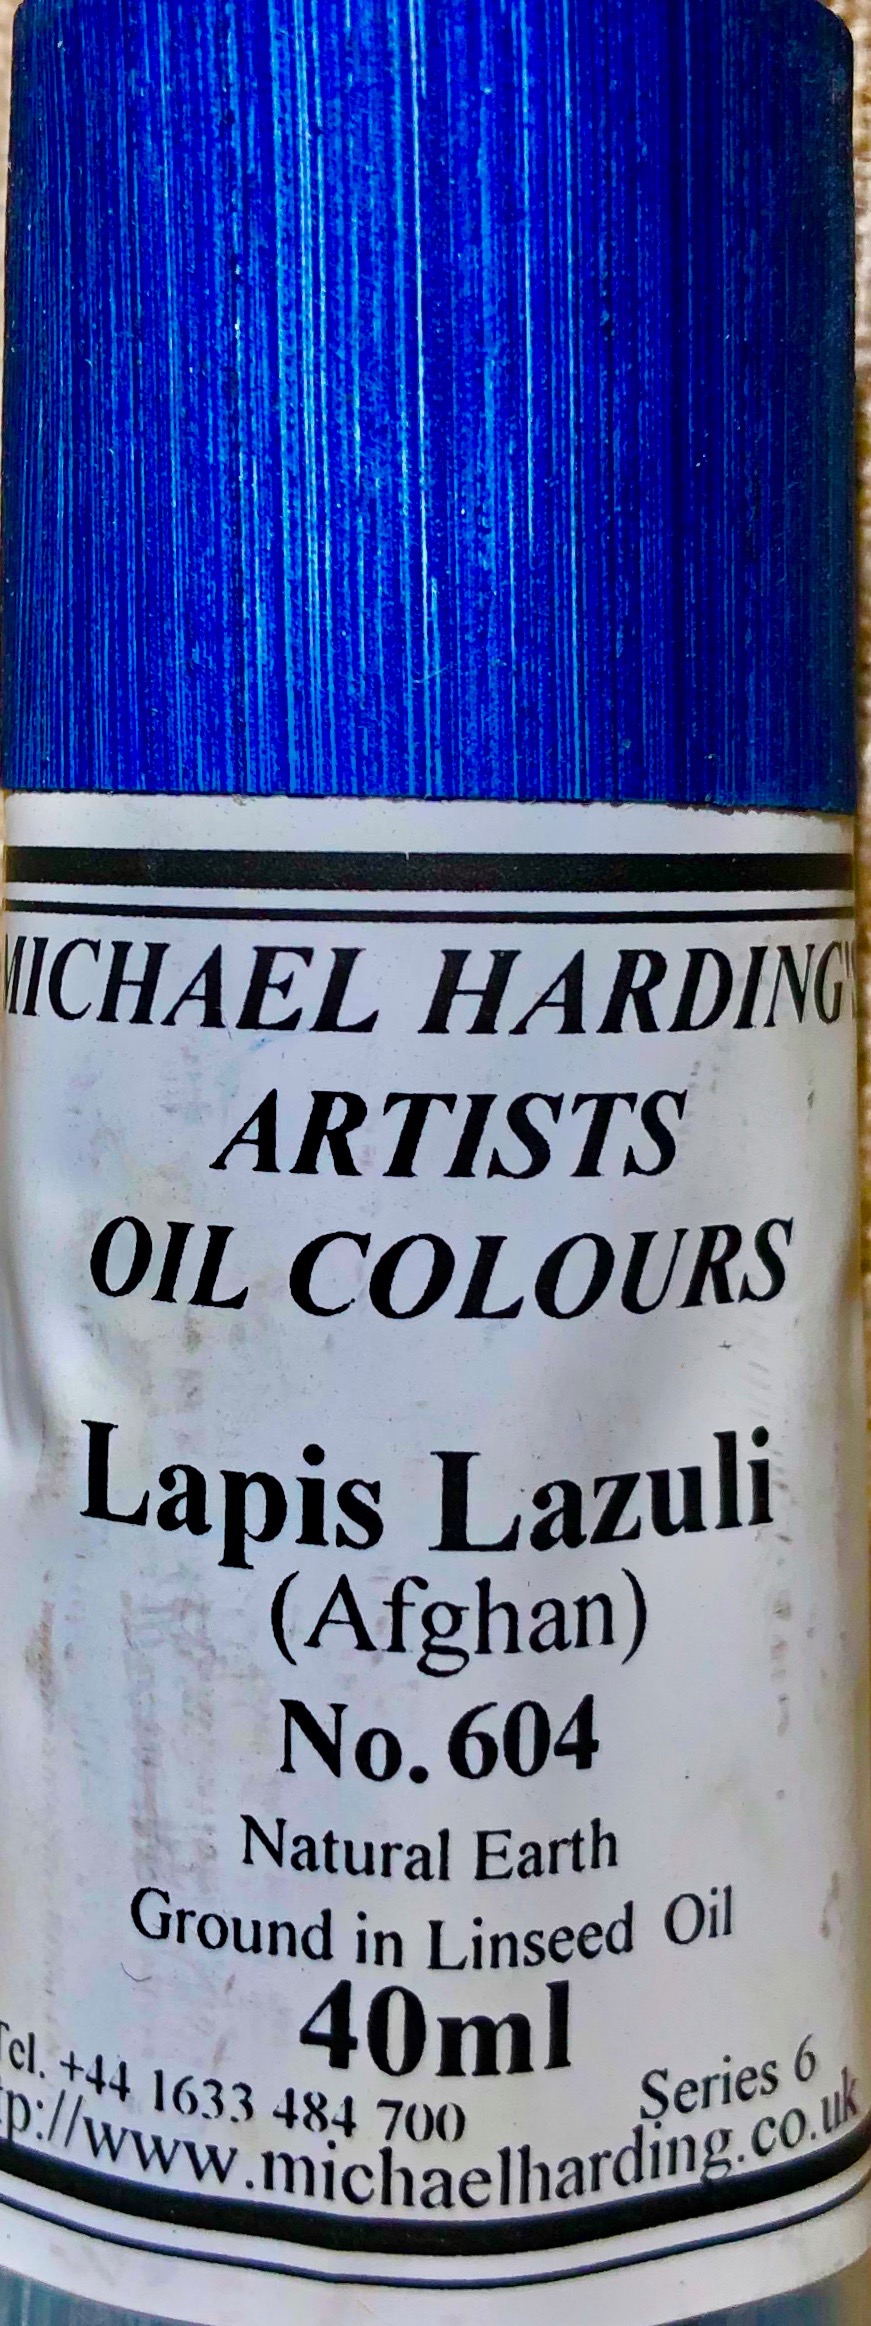 Michael Harding Lapis Lazuli